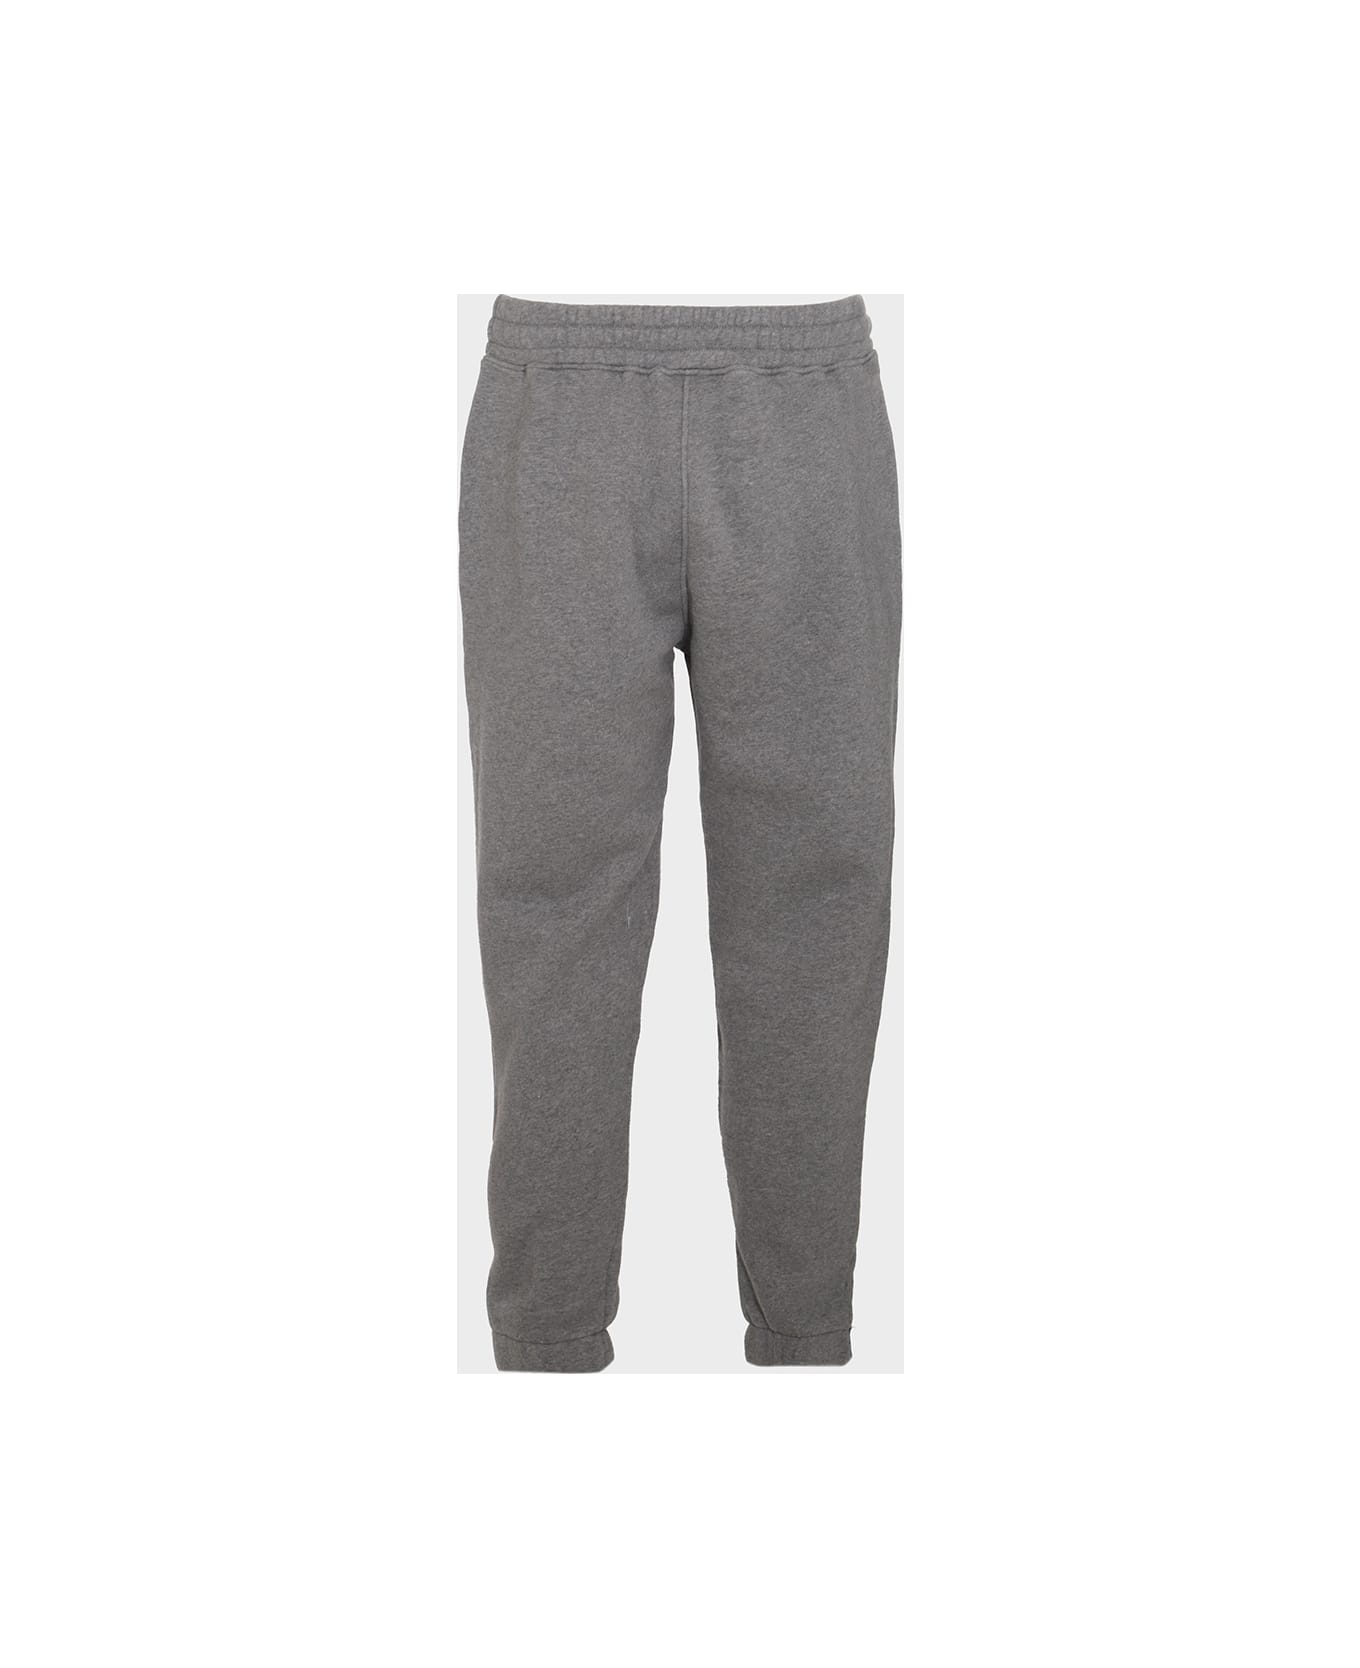 Maison Kitsuné Grey Cotton Pants - Medium Grey Melange